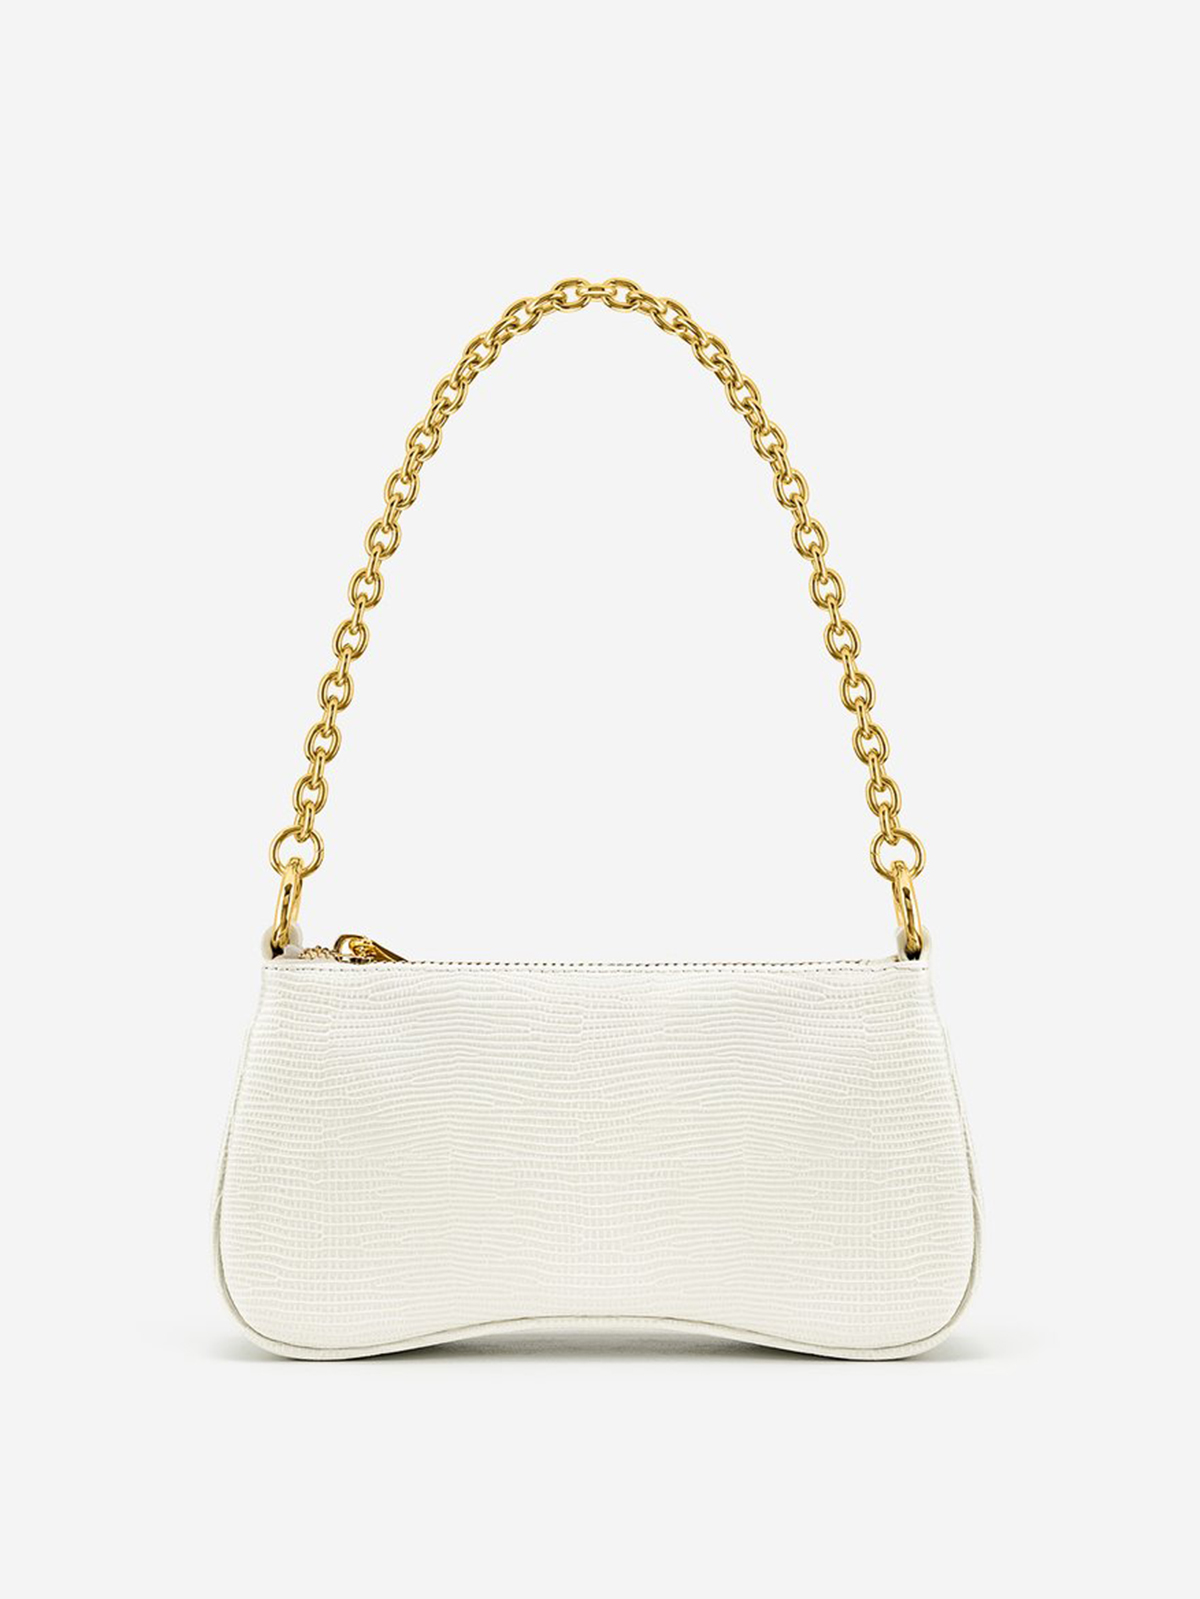 53 Trend We Love: Chain-Strap Handbags ideas